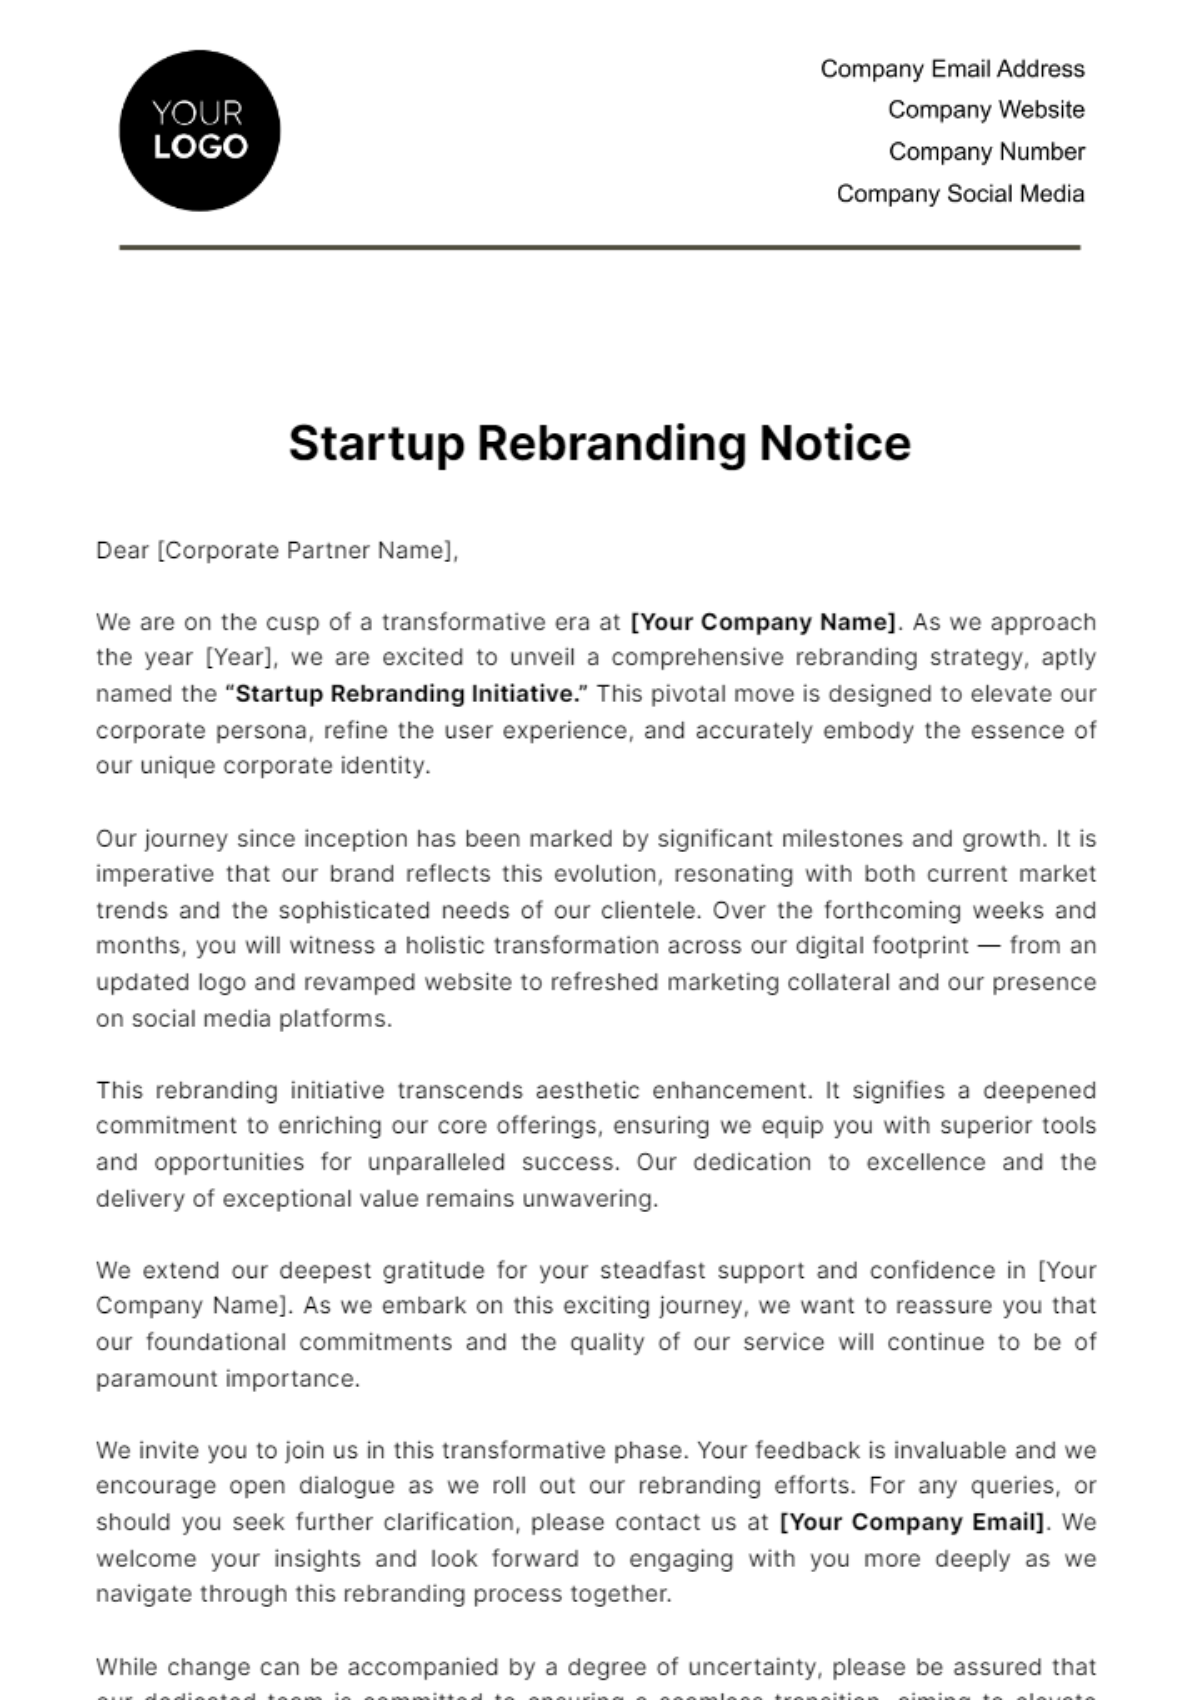 Free Startup Rebranding Notice Template